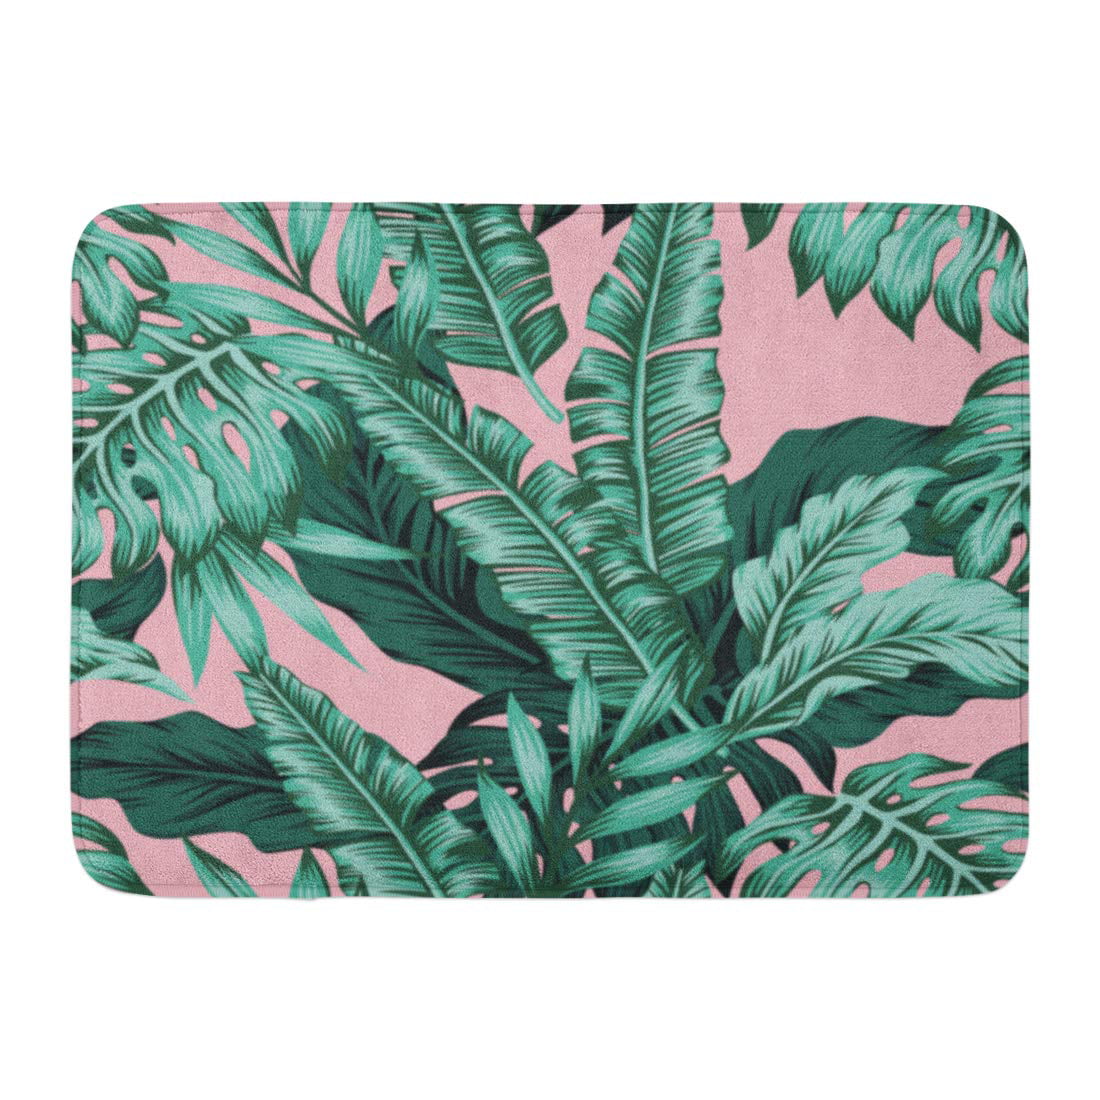 Tropical Exotic Green Leaves Floor Memory Foam Carpet Rug Non-slip Door Bath Mat 